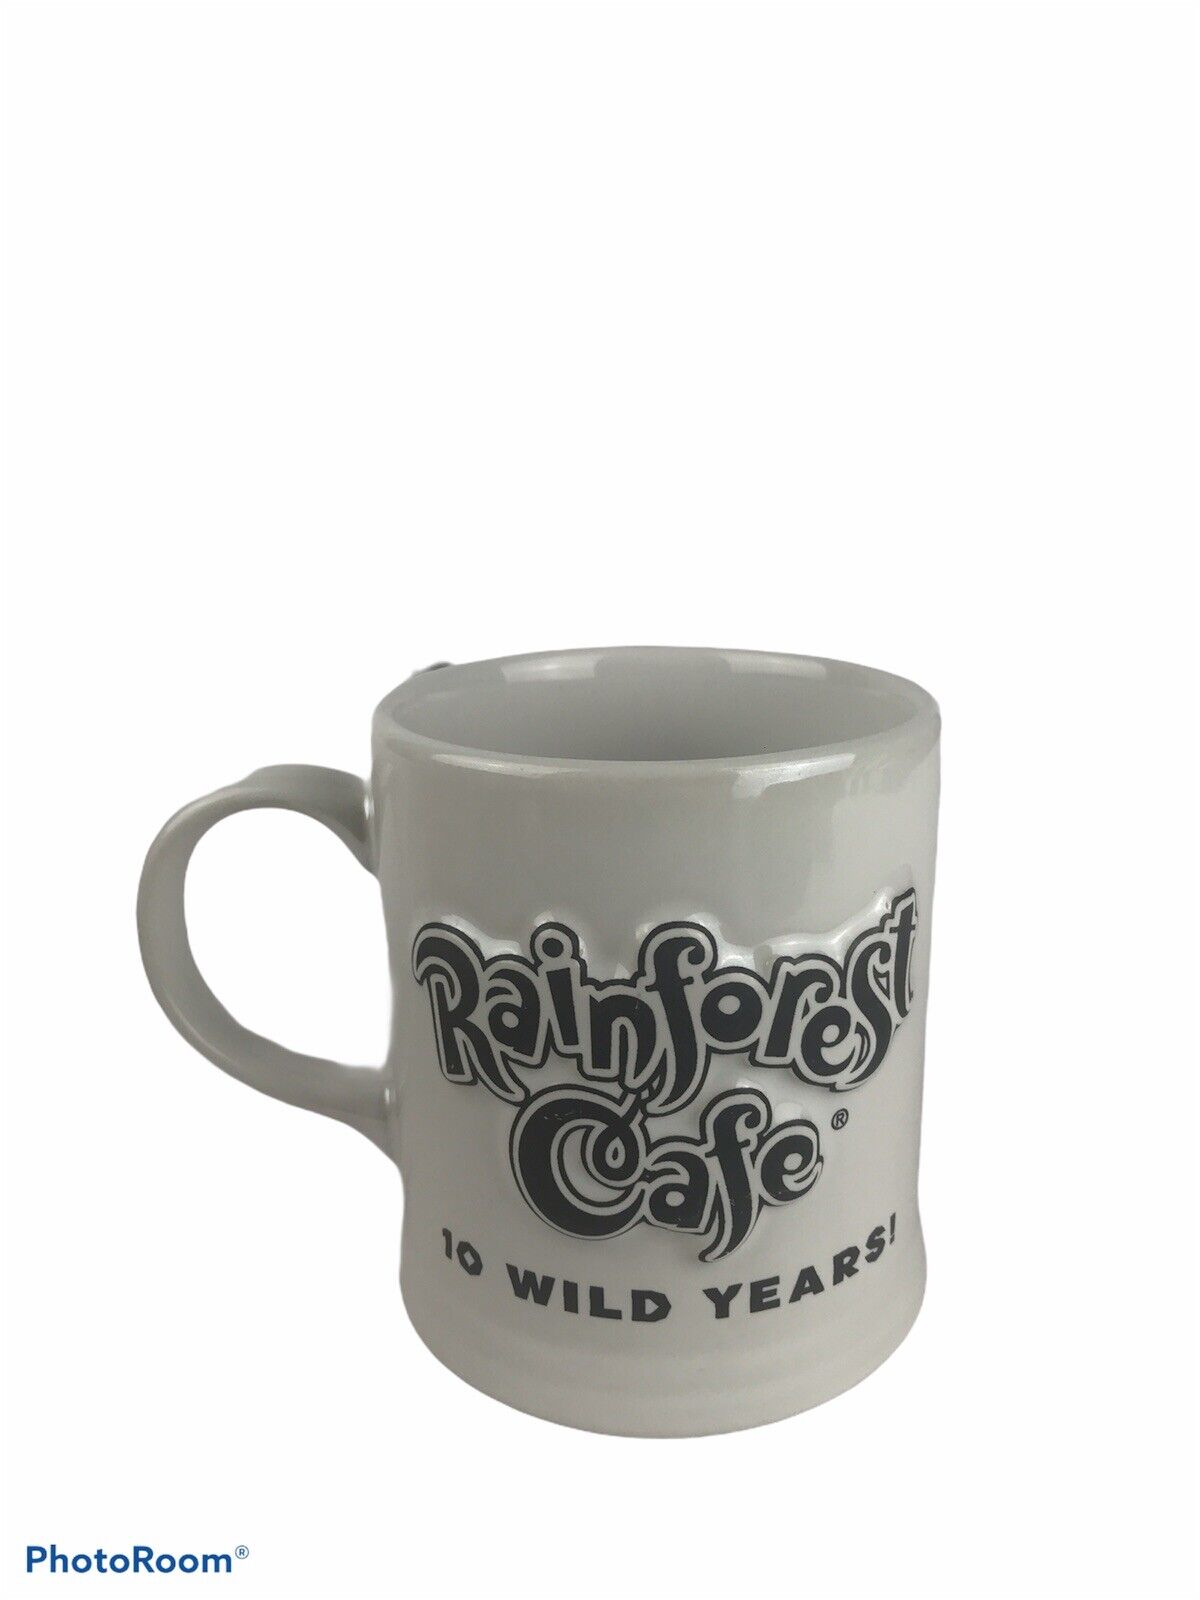 Rainforest Cafe Orlando 10 Wild Years 4” Tall 3.25” Wide White Mug